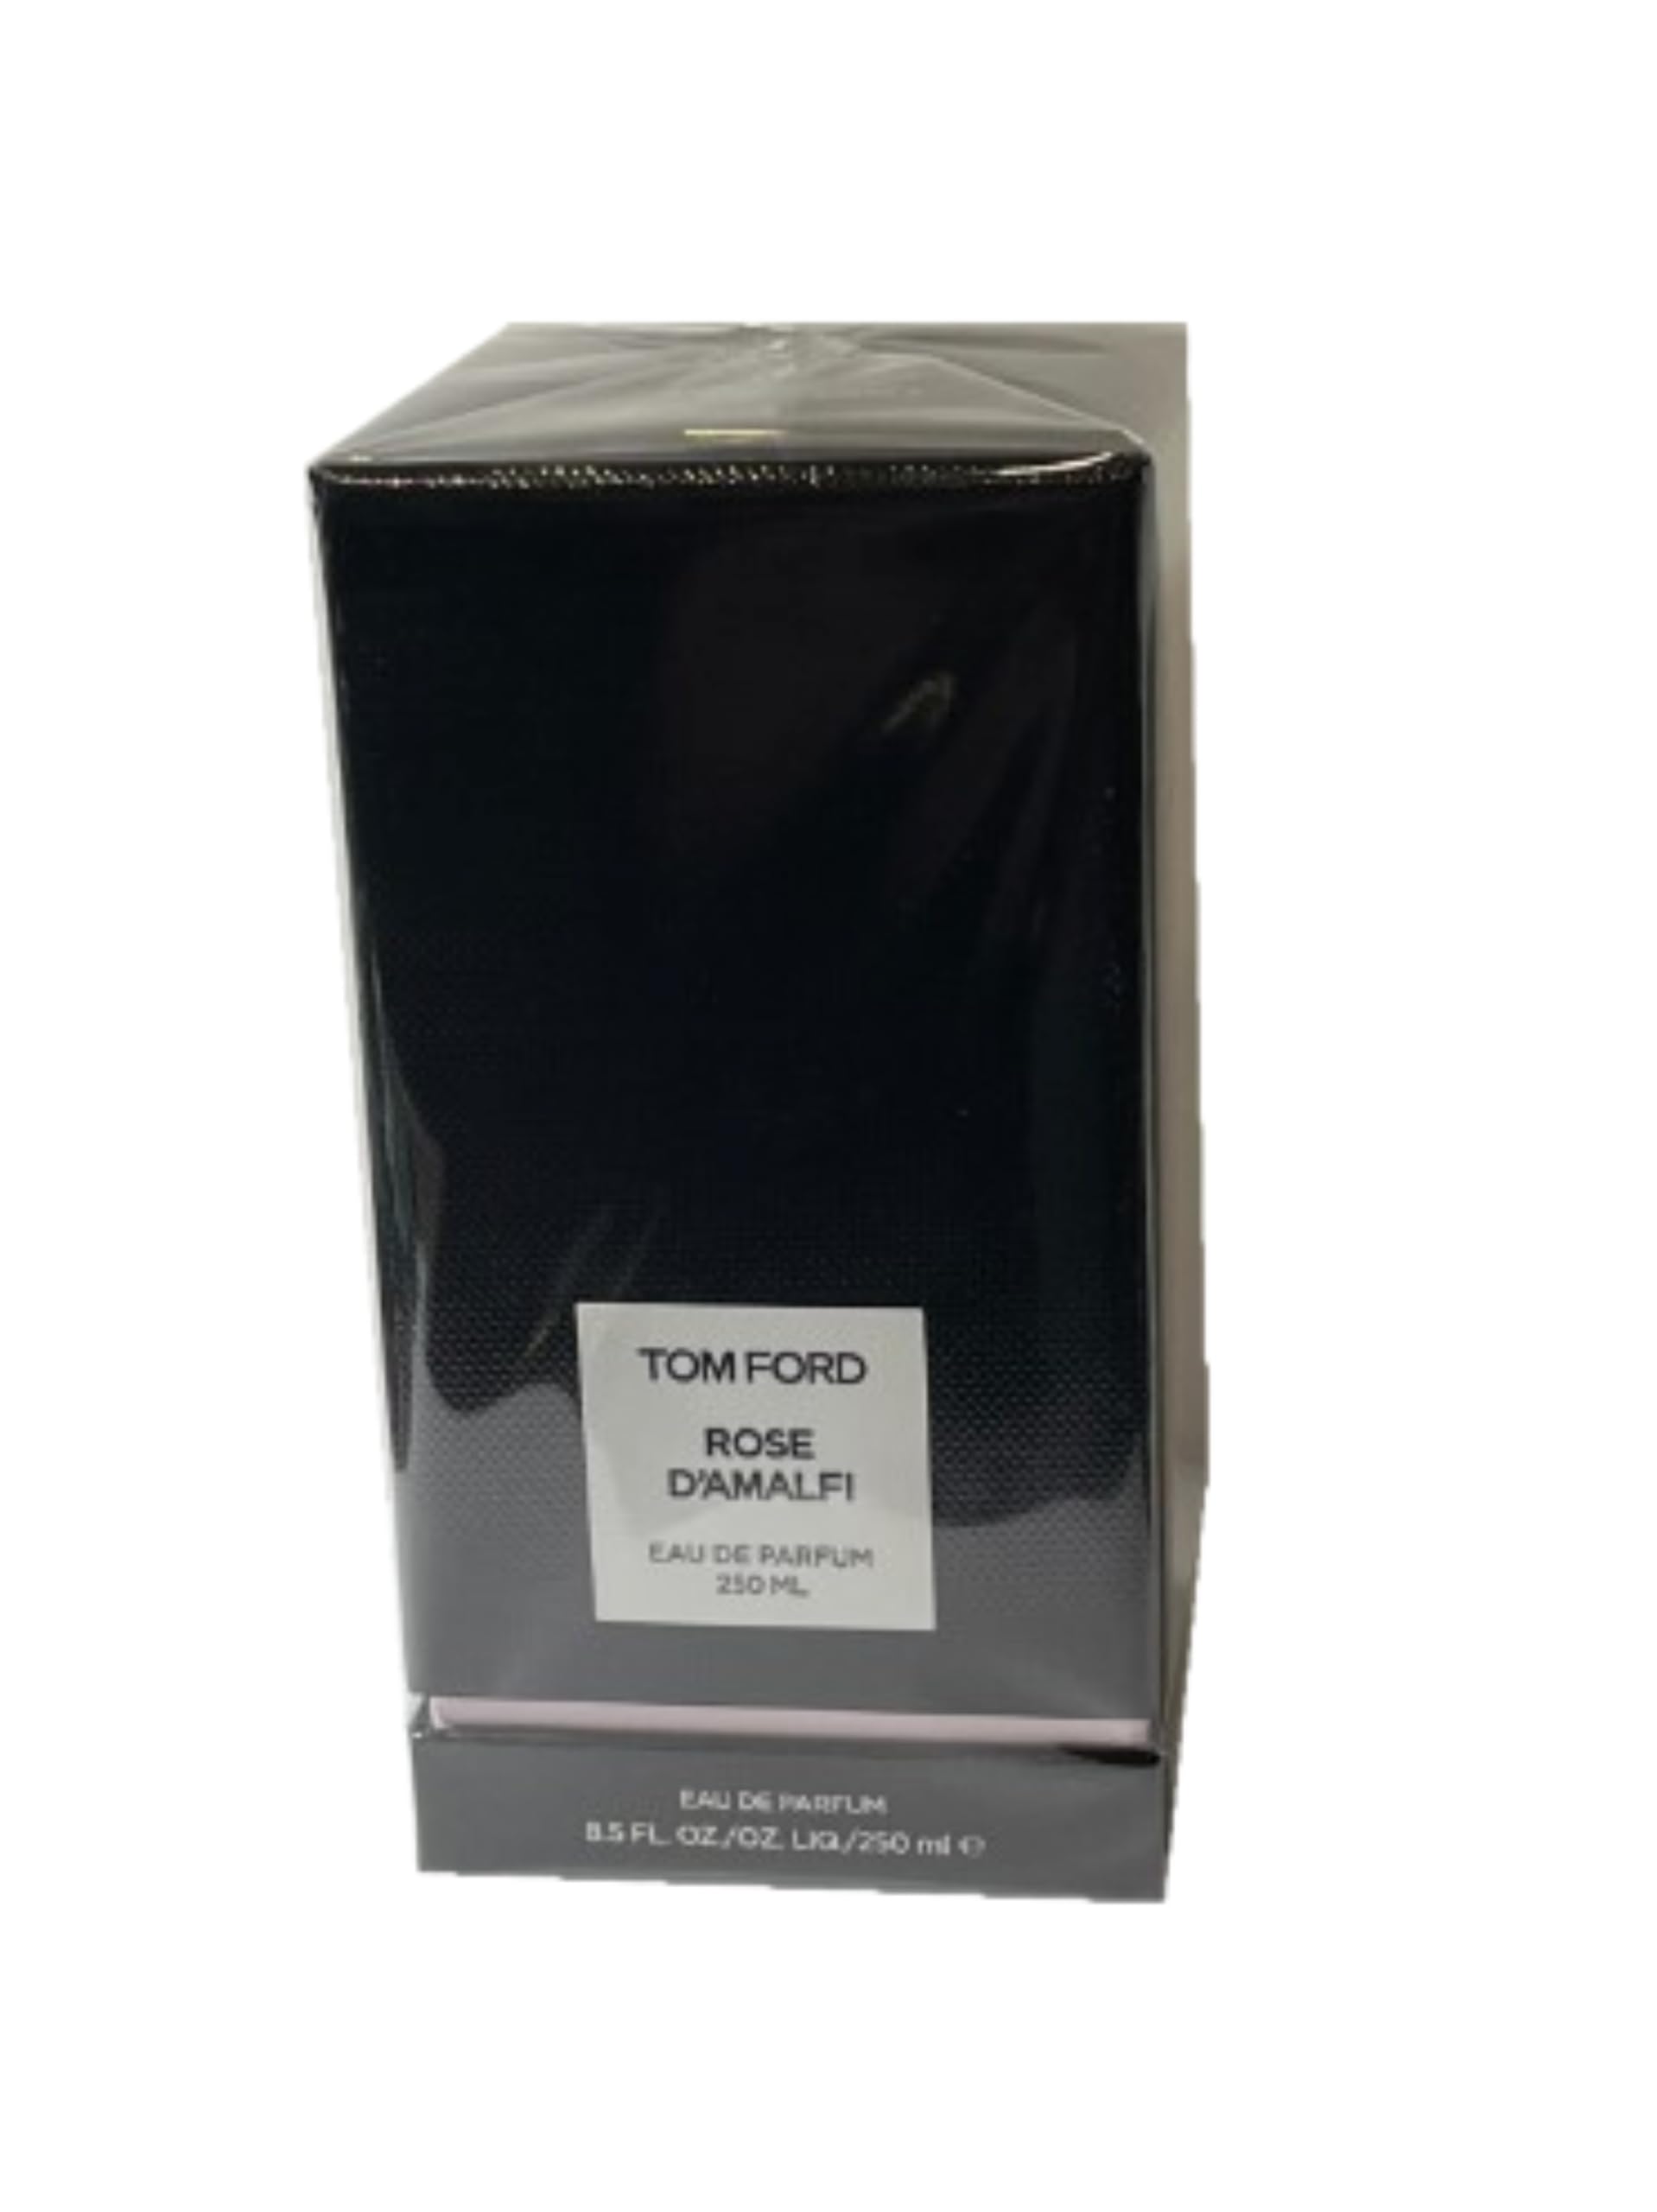 Tom Ford Rose d'Amalfi Eau de Parfum - 8.5 fl oz / 250 ml